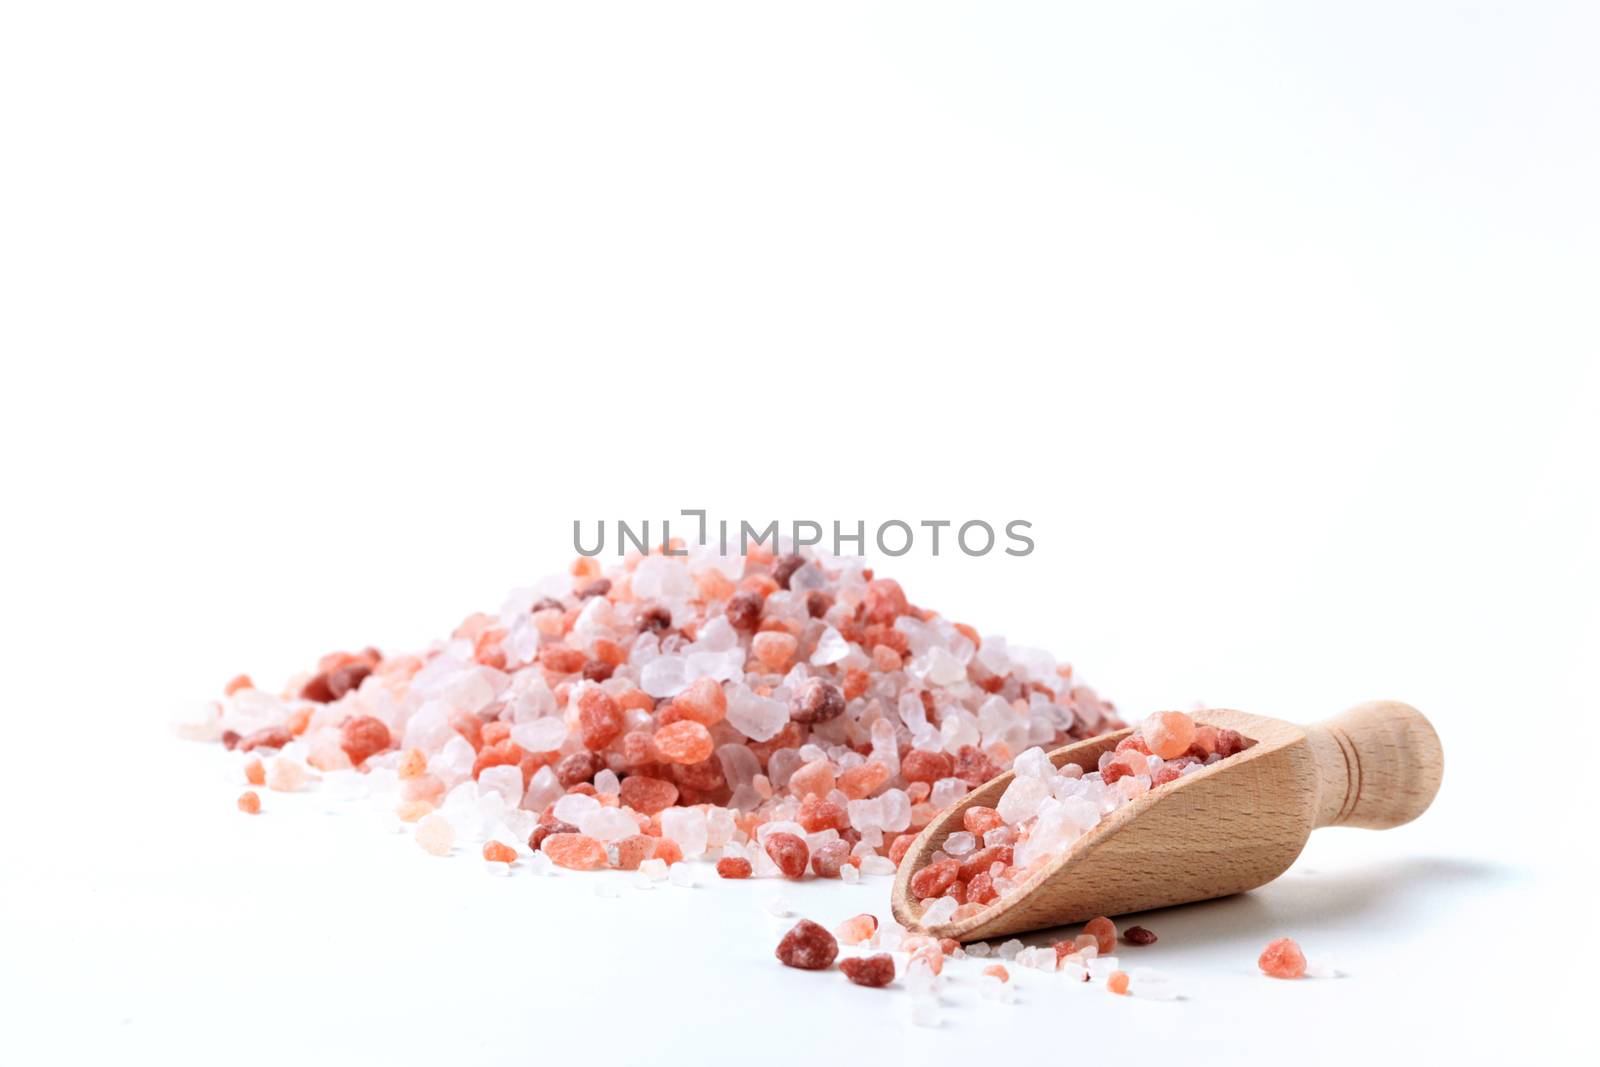 Himalaya Salt Pile with Wood Spoon Isolated On White Background